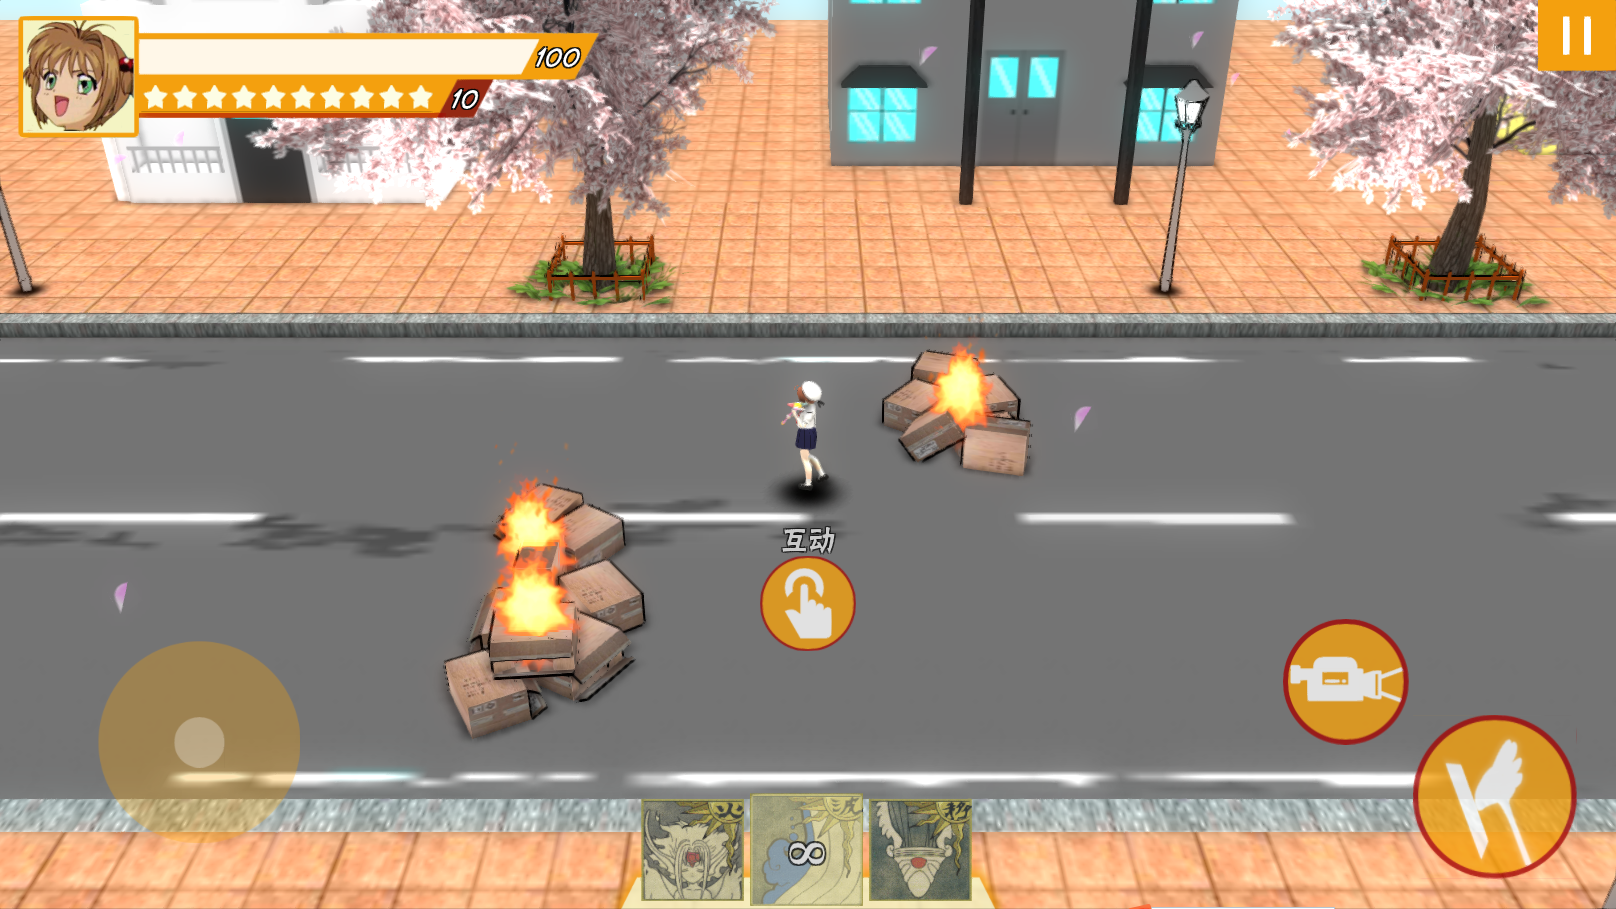 魔卡次元记 screenshot game